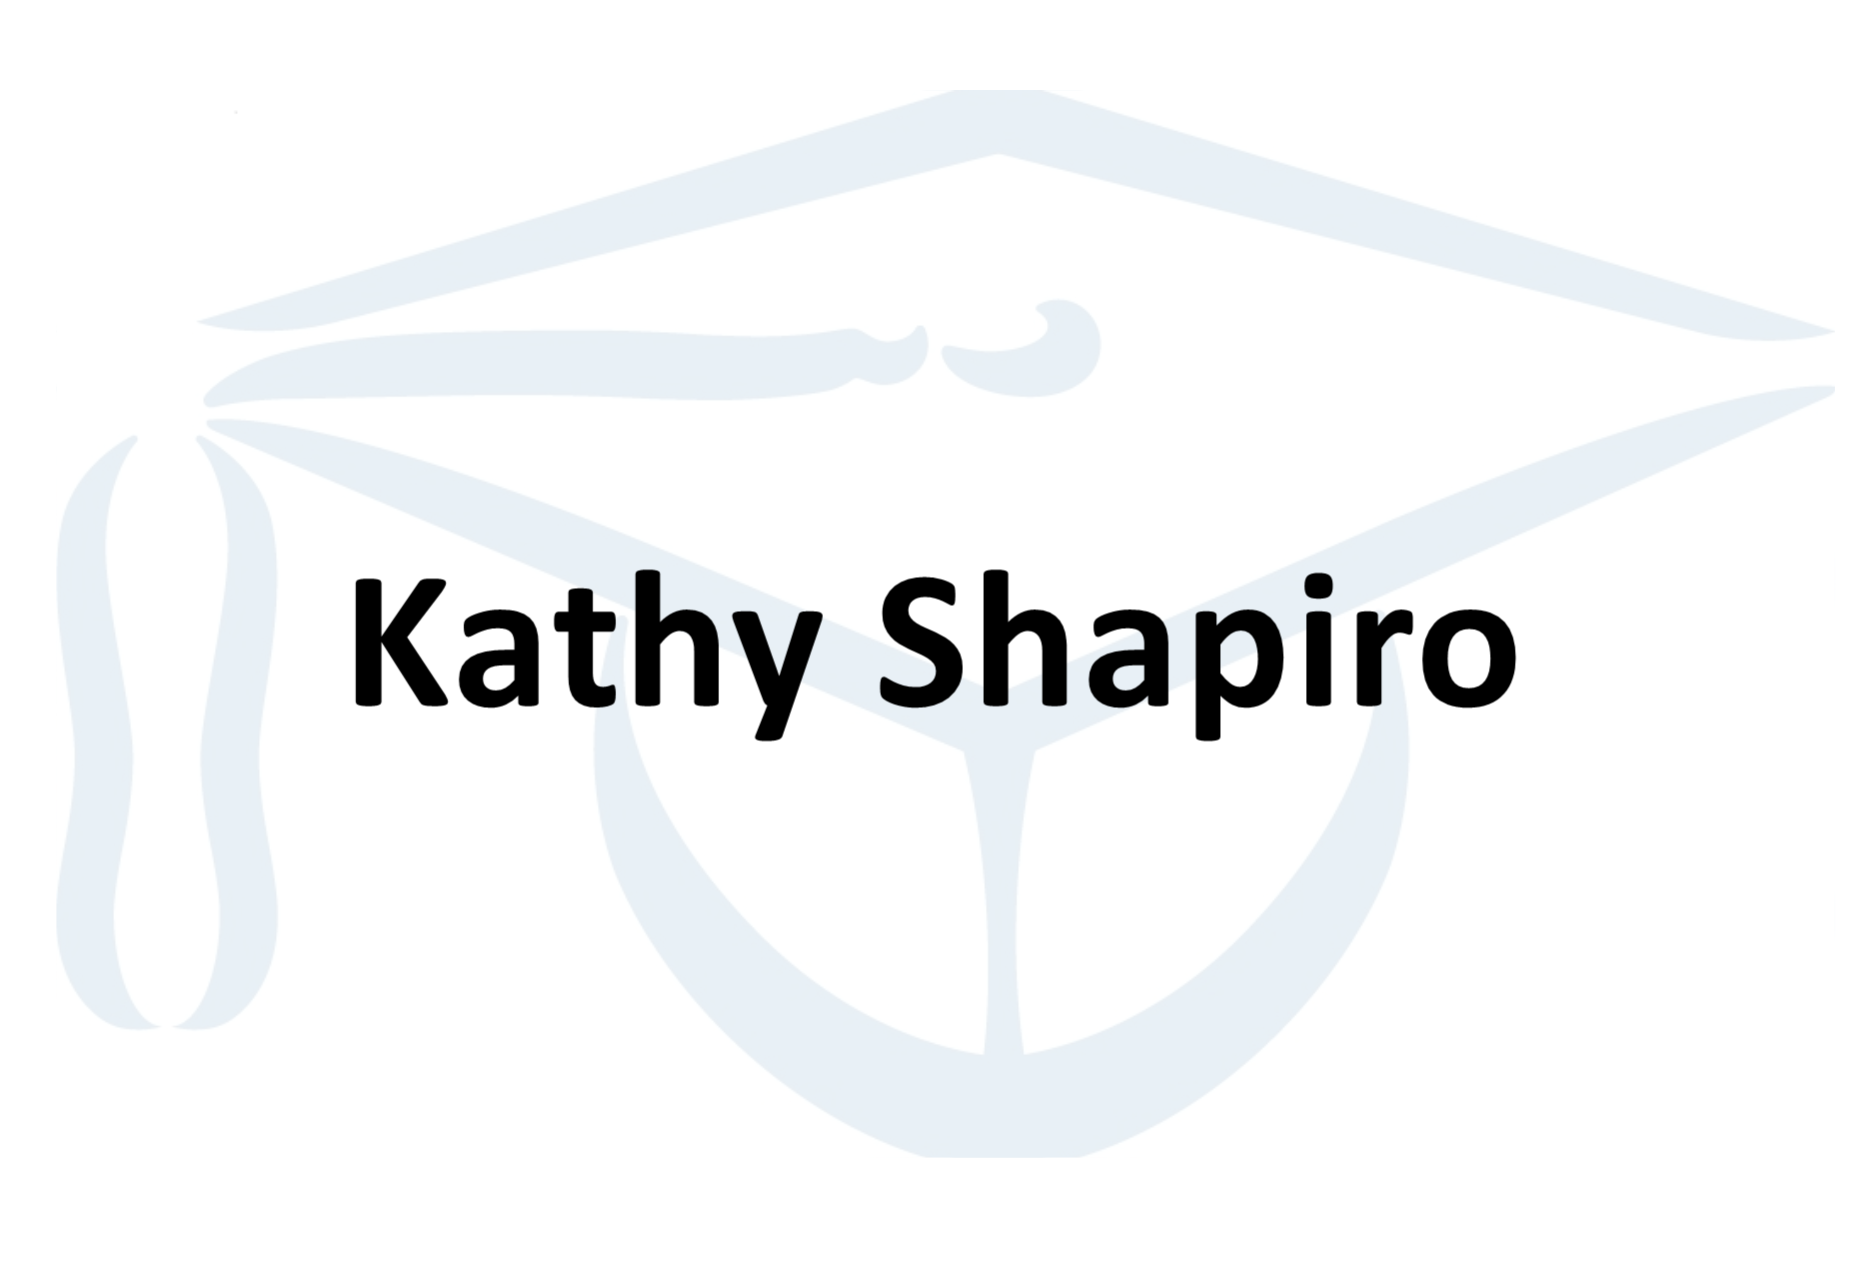 Kathy Shapiro